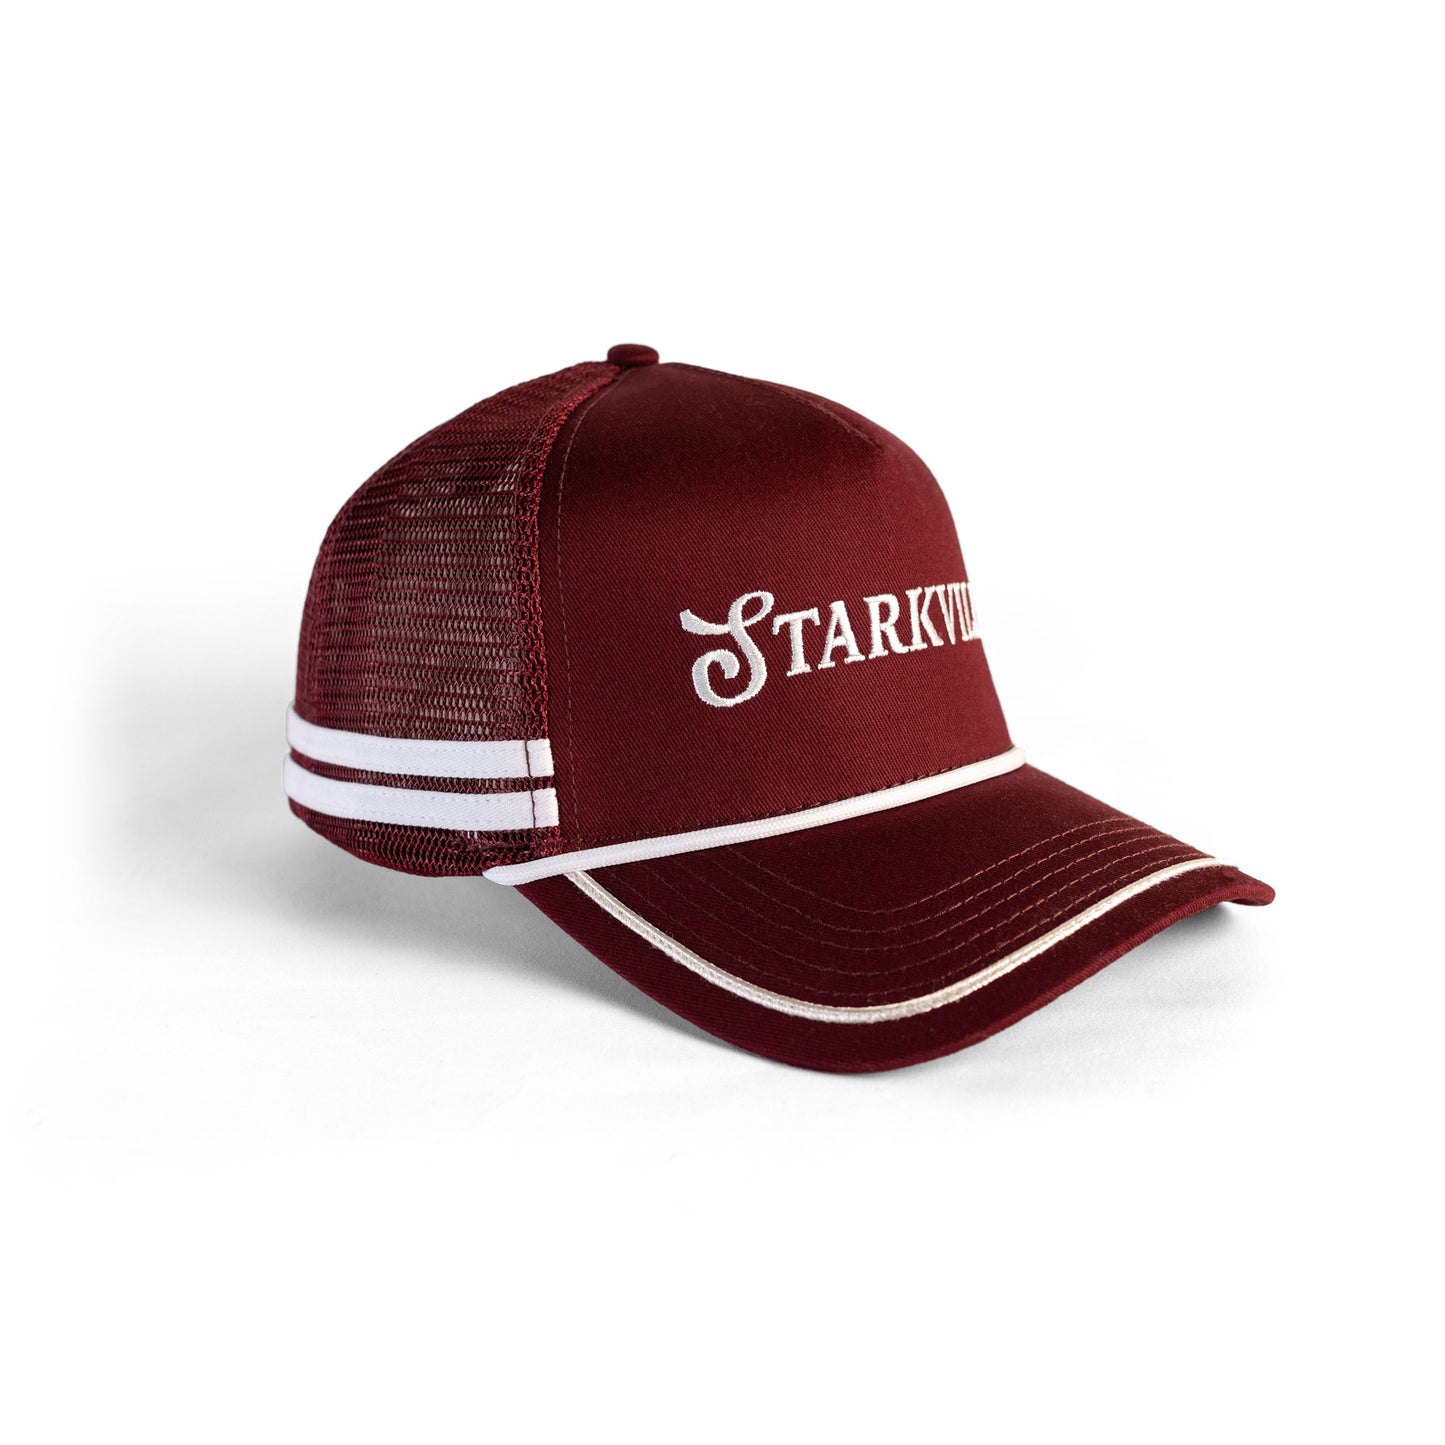 Starkville Trucker Hat